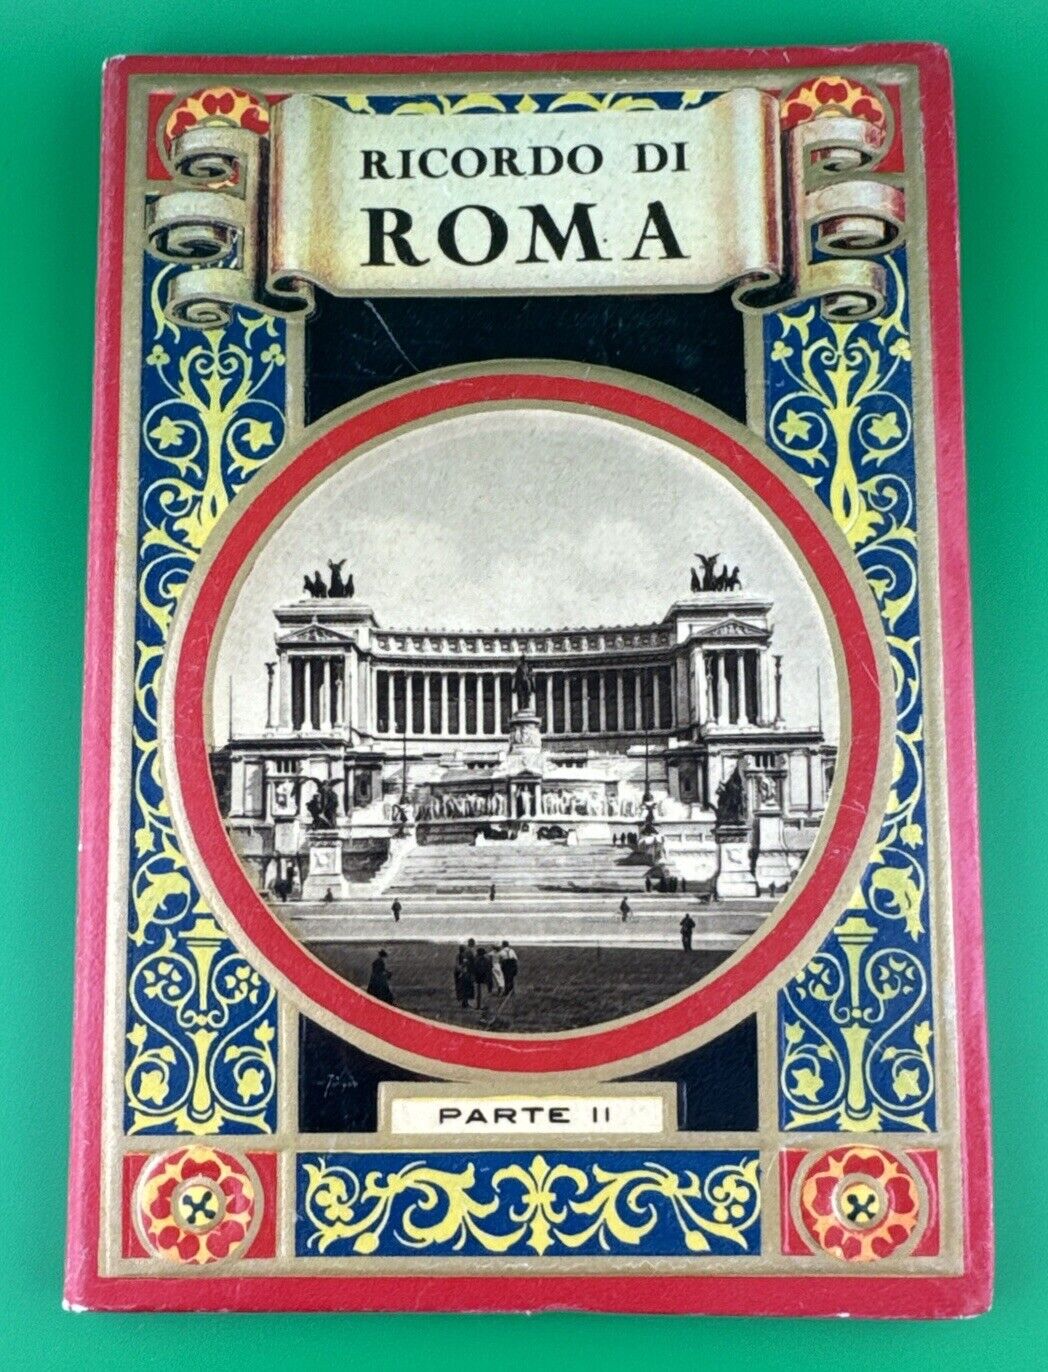 RICORDO DI ROMA Part II Vintage Antique Rome Photo Book